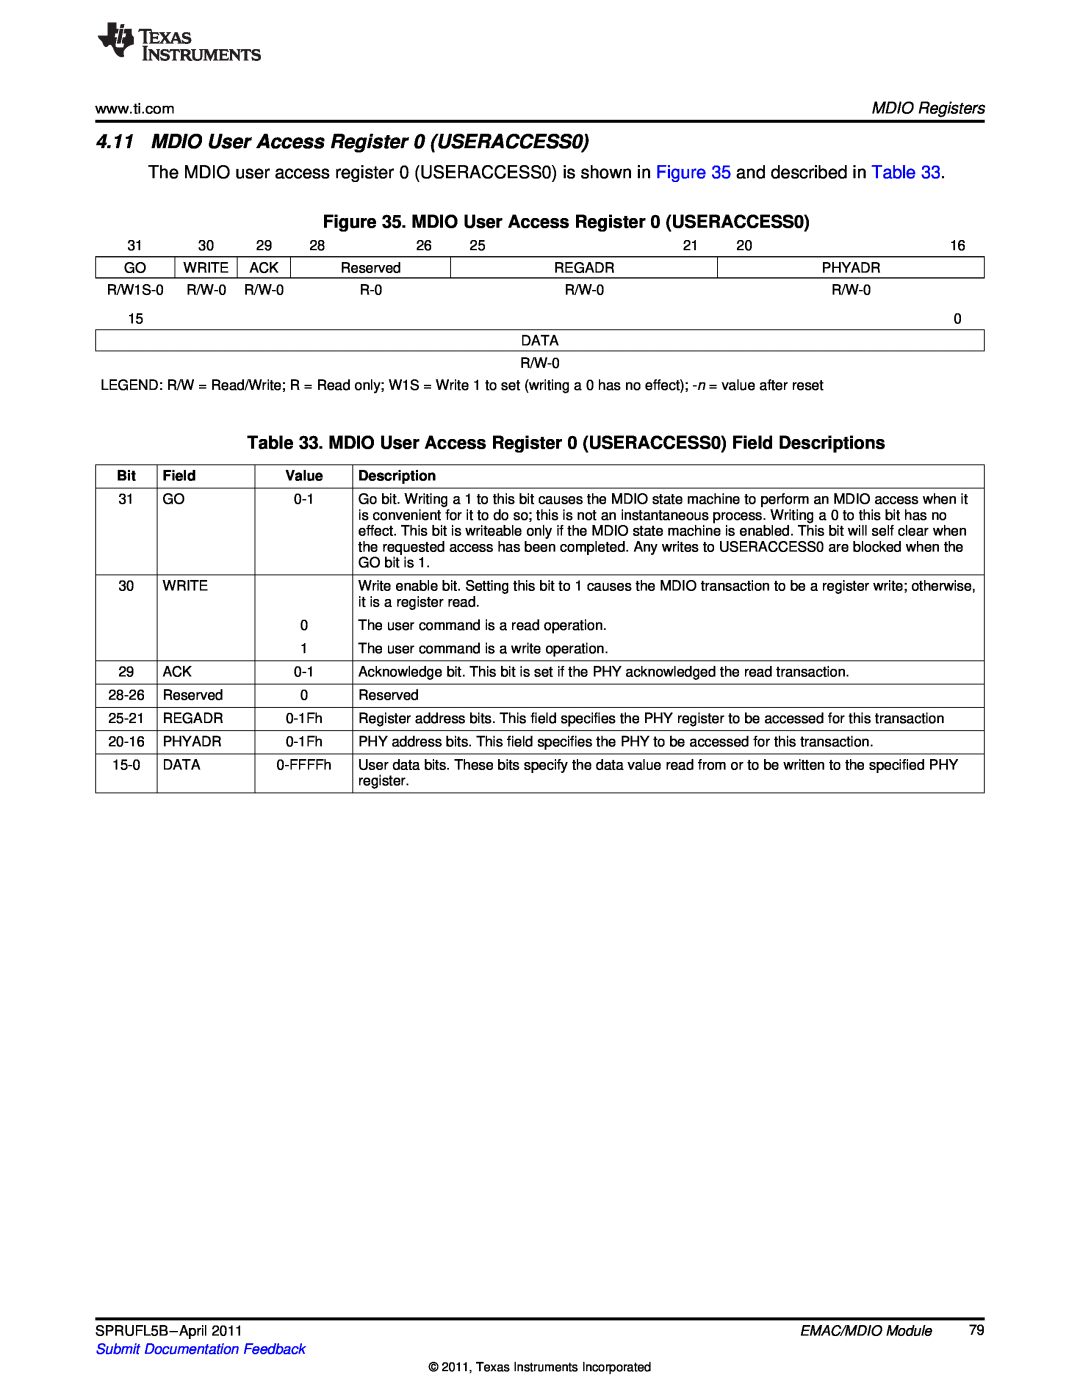 Texas Instruments TMS320C674X manual MDIO User Access Register 0 USERACCESS0, MDIO Registers, Field, Value, Description 